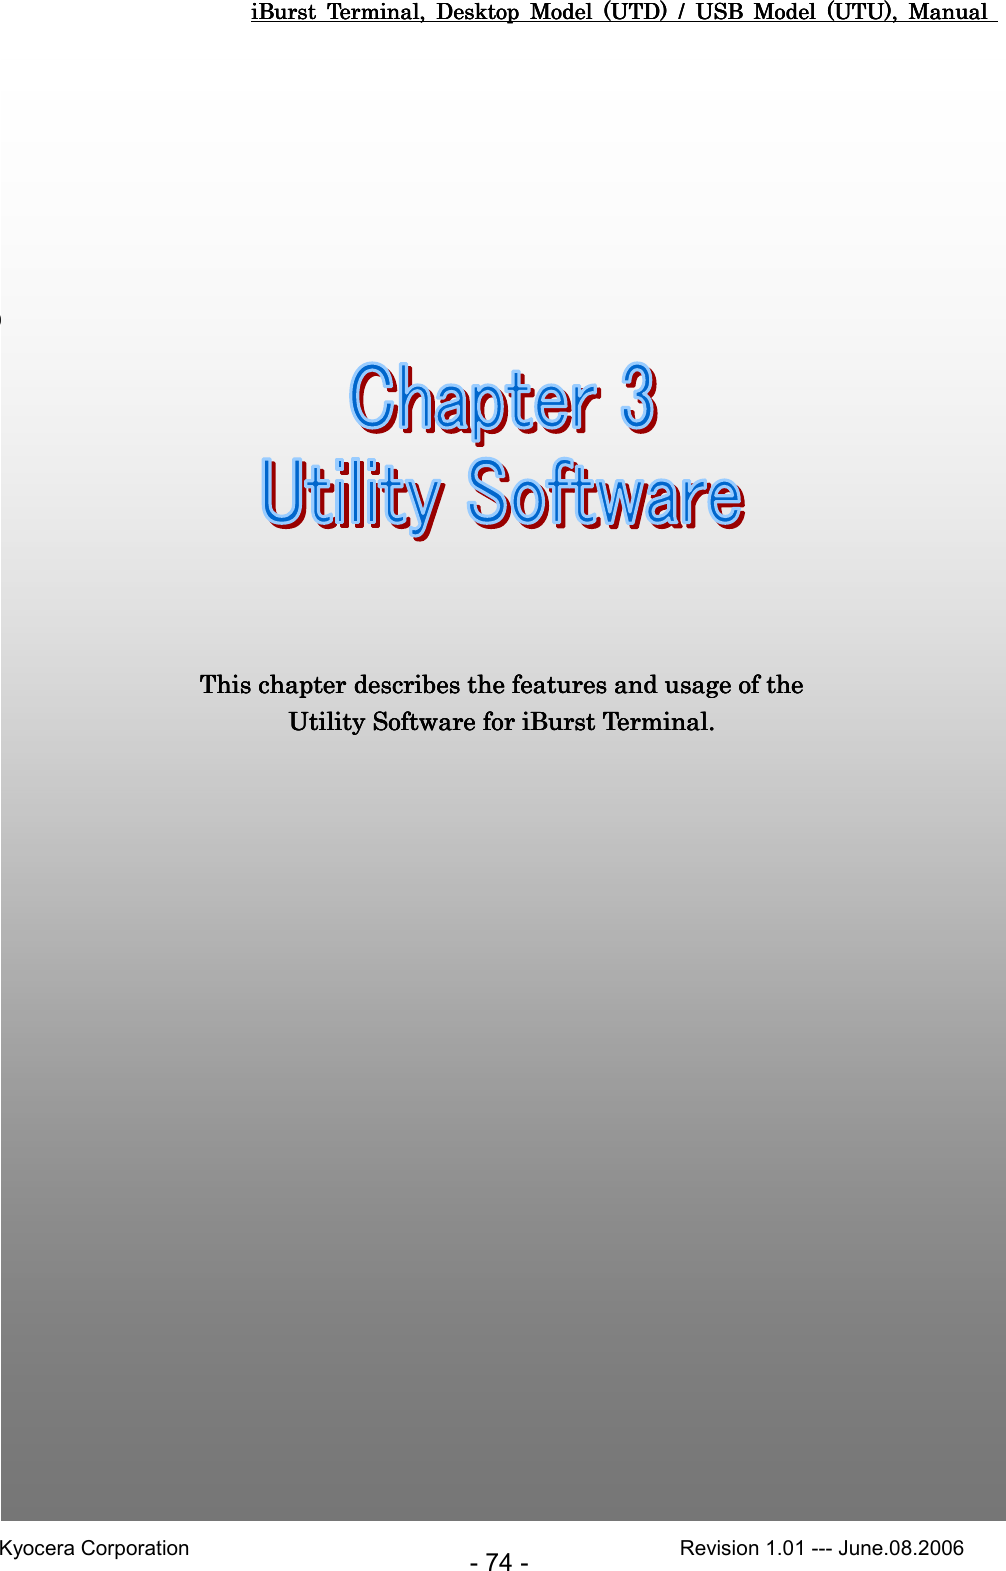 iBurst  Terminal,  Desktop  Model  (UTD)  /  USB  Model  (UTU),  Manual iBurst  Terminal,  Desktop  Model  (UTD)  /  USB  Model  (UTU),  Manual iBurst  Terminal,  Desktop  Model  (UTD)  /  USB  Model  (UTU),  Manual iBurst  Terminal,  Desktop  Model  (UTD)  /  USB  Model  (UTU),  Manual       Kyocera Corporation                                                                                              Revision 1.01 --- June.08.2006 - 74 -                         Chapter 3 Utility SoftwareChapter 3 Utility SoftwareChapter 3 Utility SoftwareChapter 3 Utility Software                                                                                                                                This chapter describes the features and usage of the This chapter describes the features and usage of the This chapter describes the features and usage of the This chapter describes the features and usage of the Utility Software Utility Software Utility Software Utility Software for iBurst Terminal.for iBurst Terminal.for iBurst Terminal.for iBurst Terminal.    